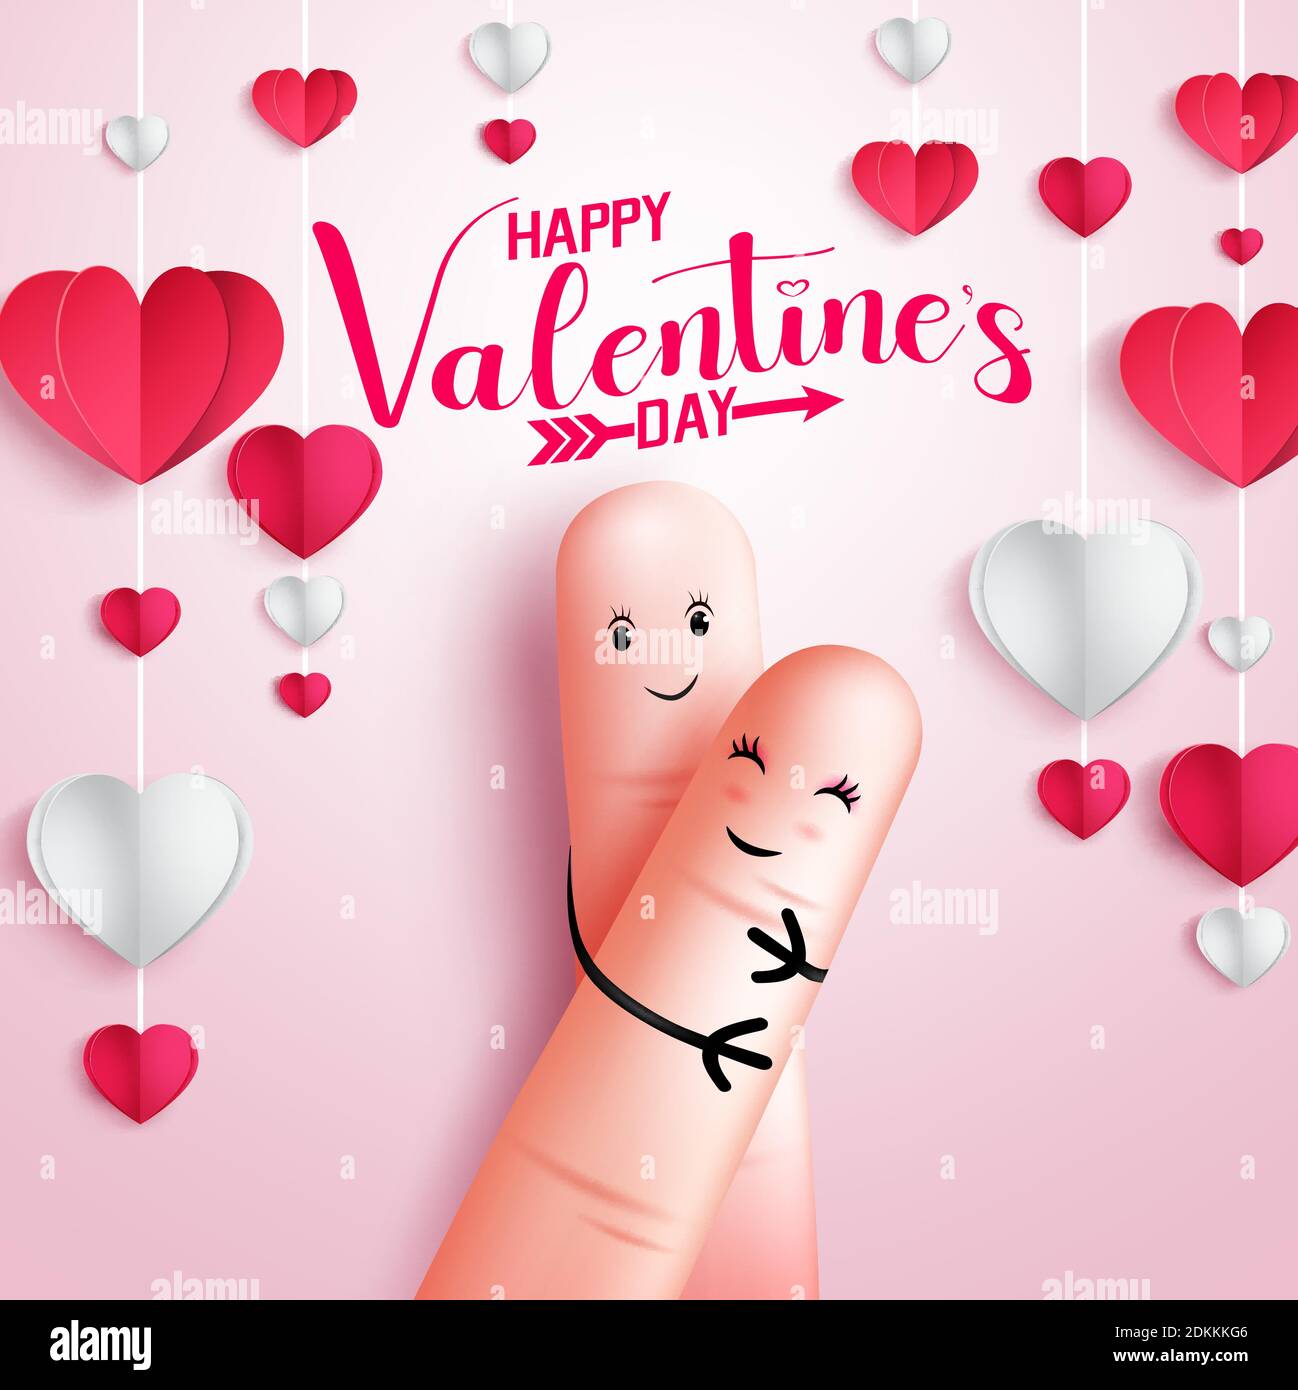 New Happy Valentine's Day Decoration Chocolate Heart Bear Pink